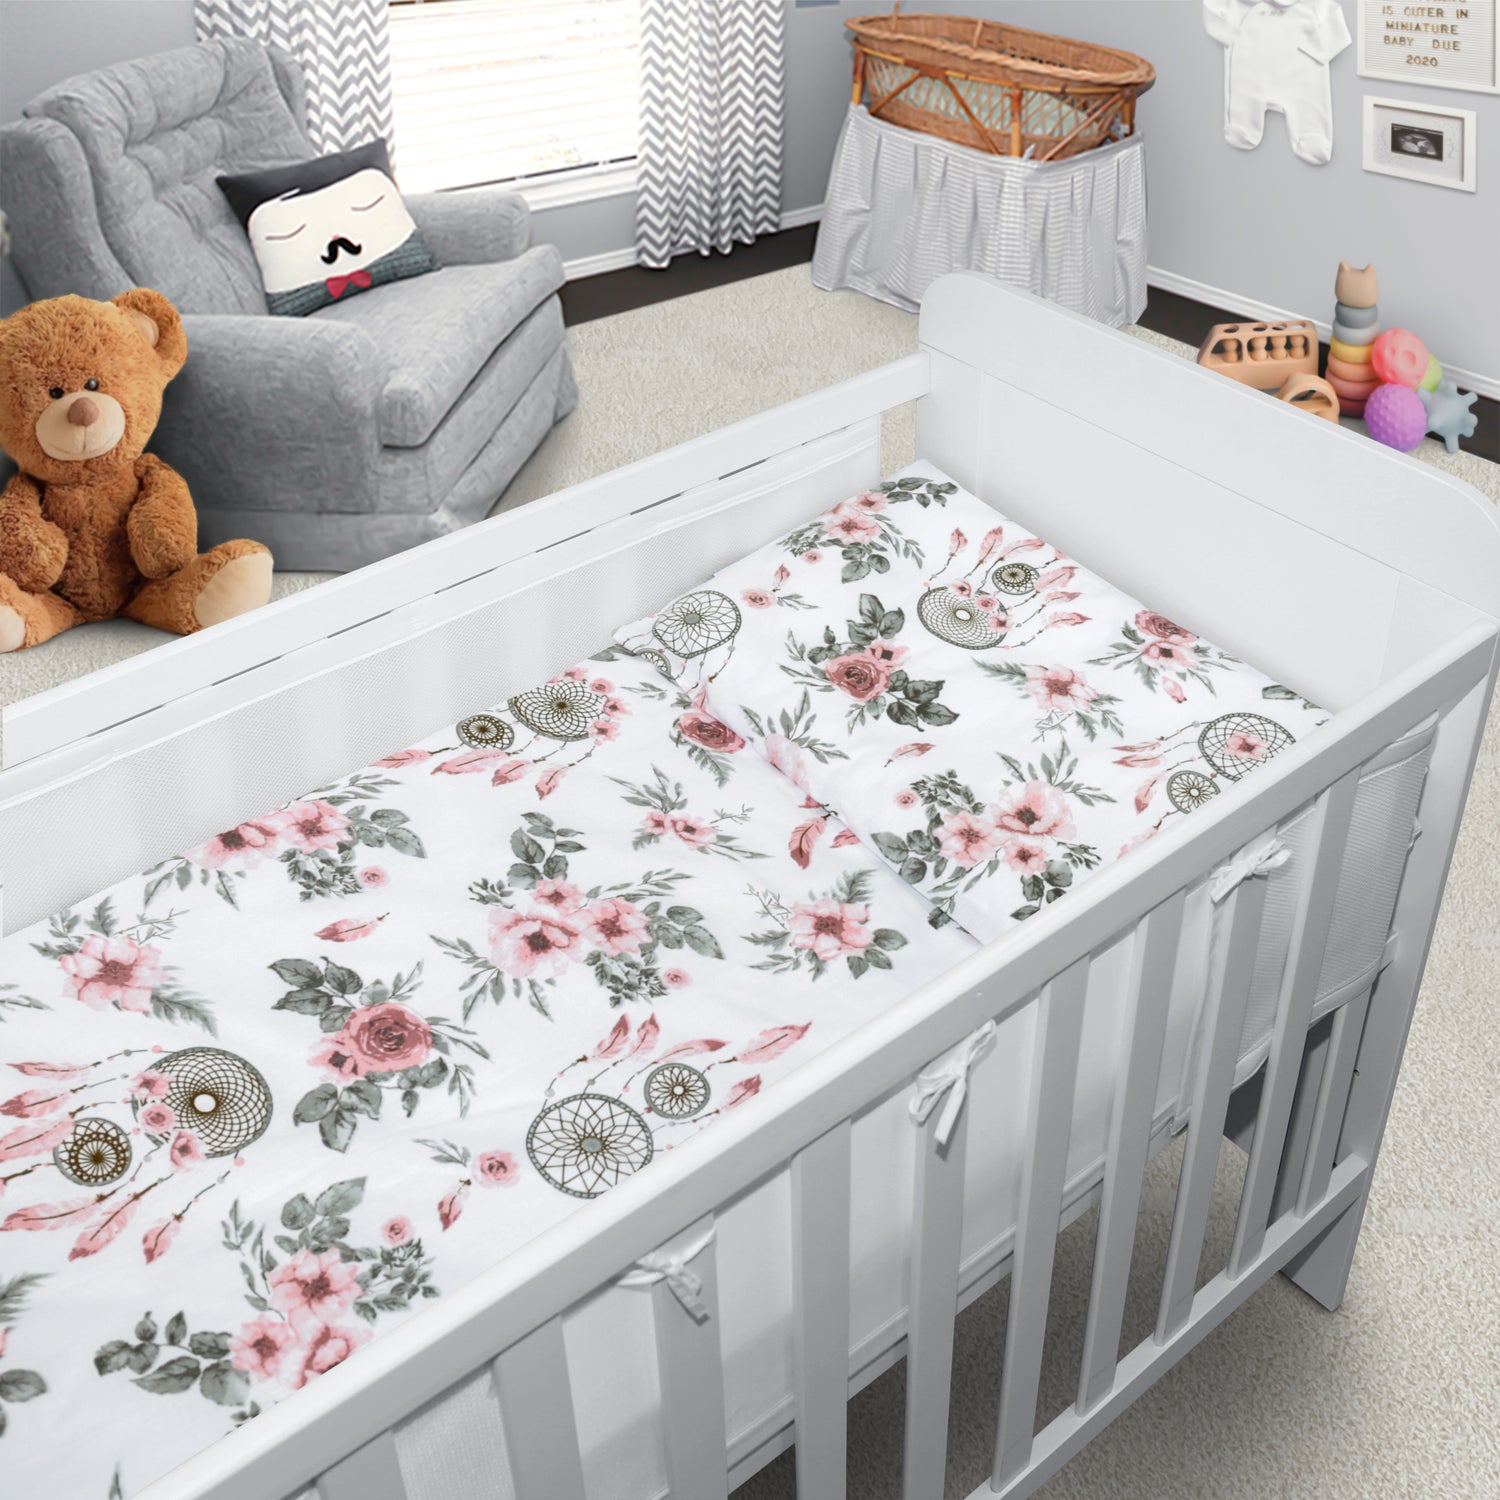 Baby Cot Bedding Set 6Pc Fit Cot bed 140x70cm Dream Catcher Peach